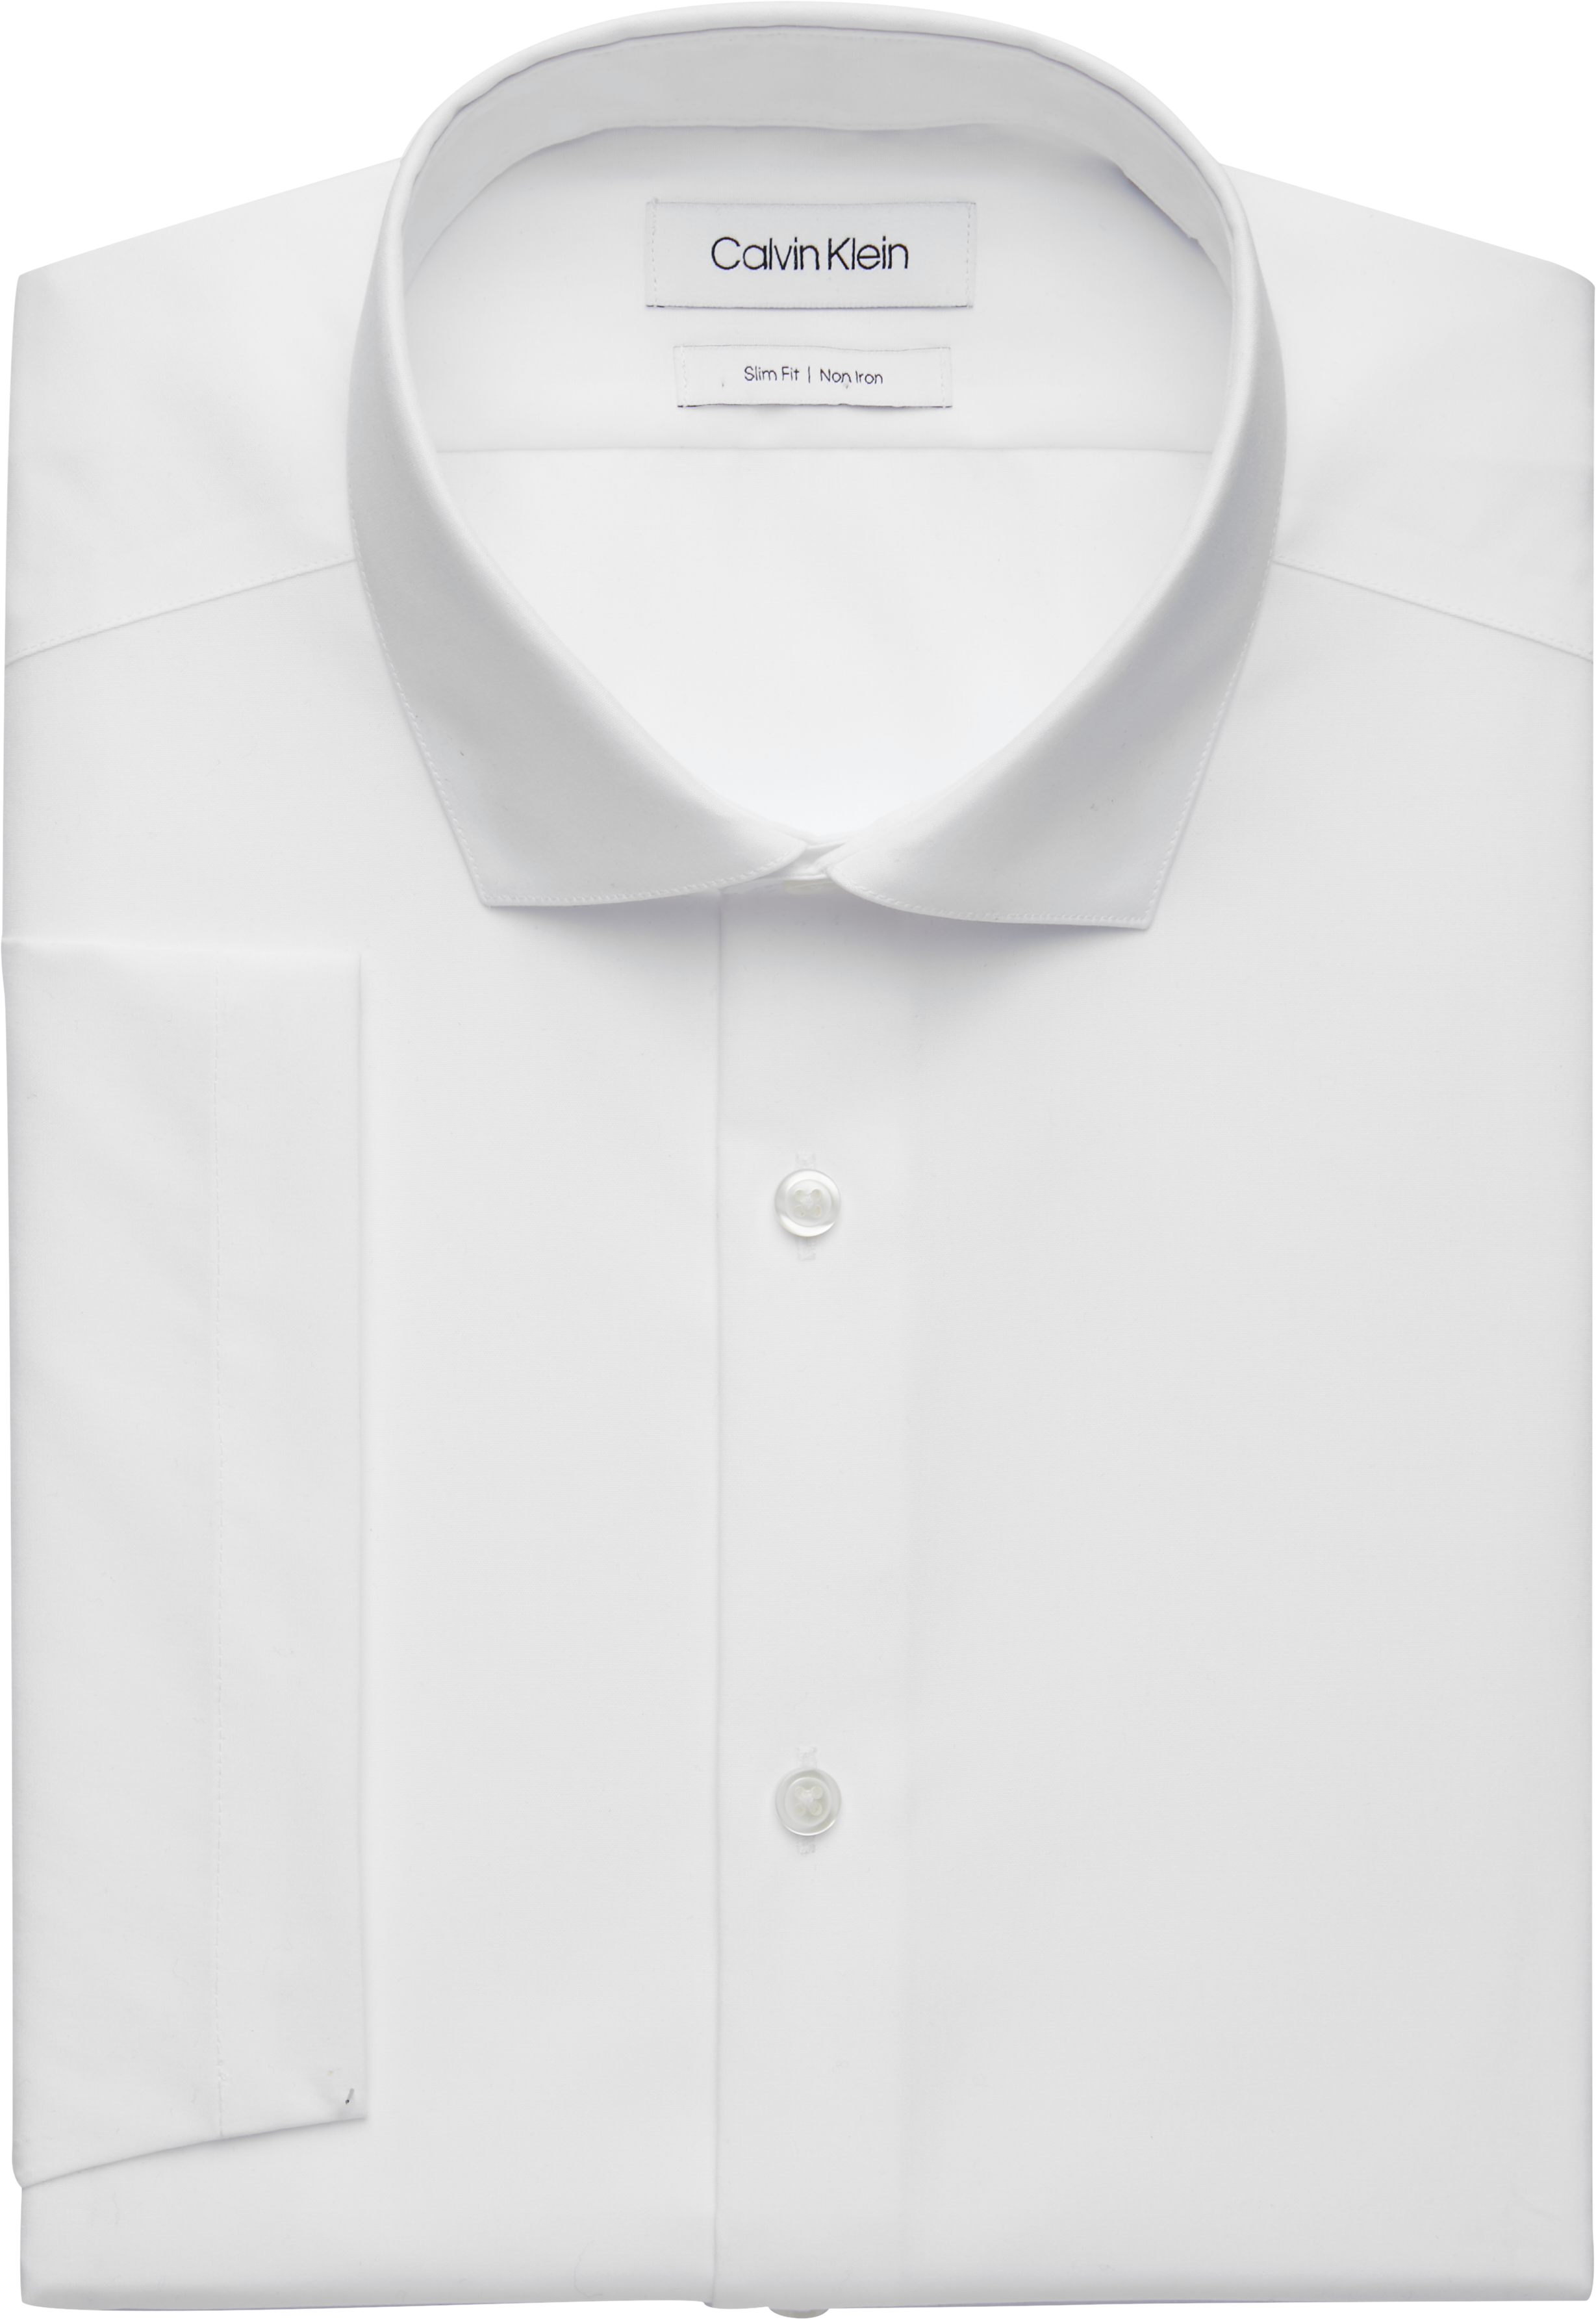 Calvin Klein White Slim Fit Short Sleeve Dress Shirt - Men's Sale | Men's  Wearhouse